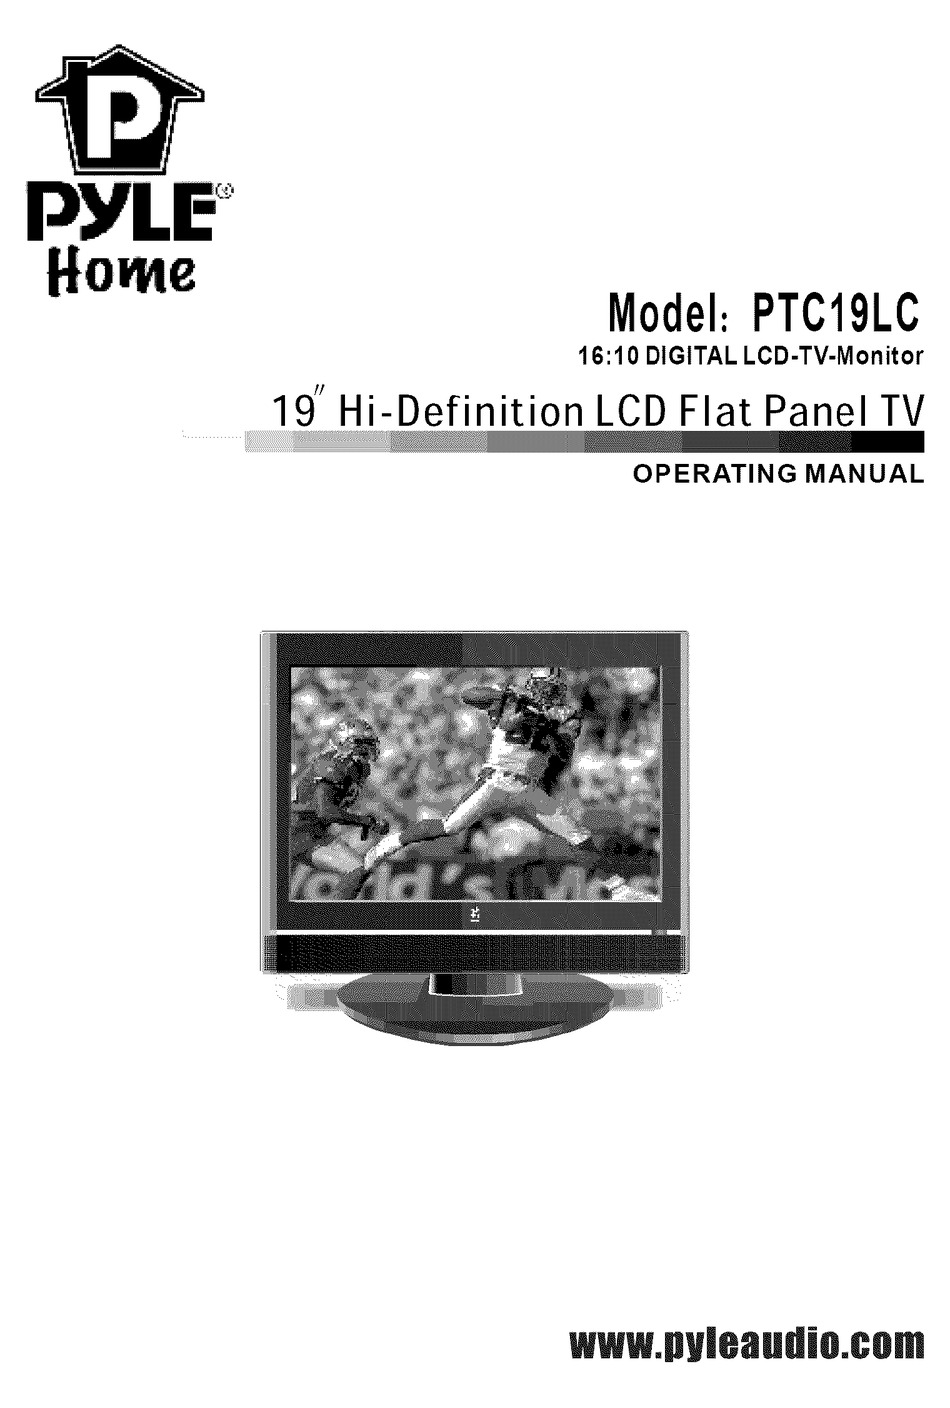 PYLE PTC19LC OPERATING MANUAL Pdf Download | ManualsLib